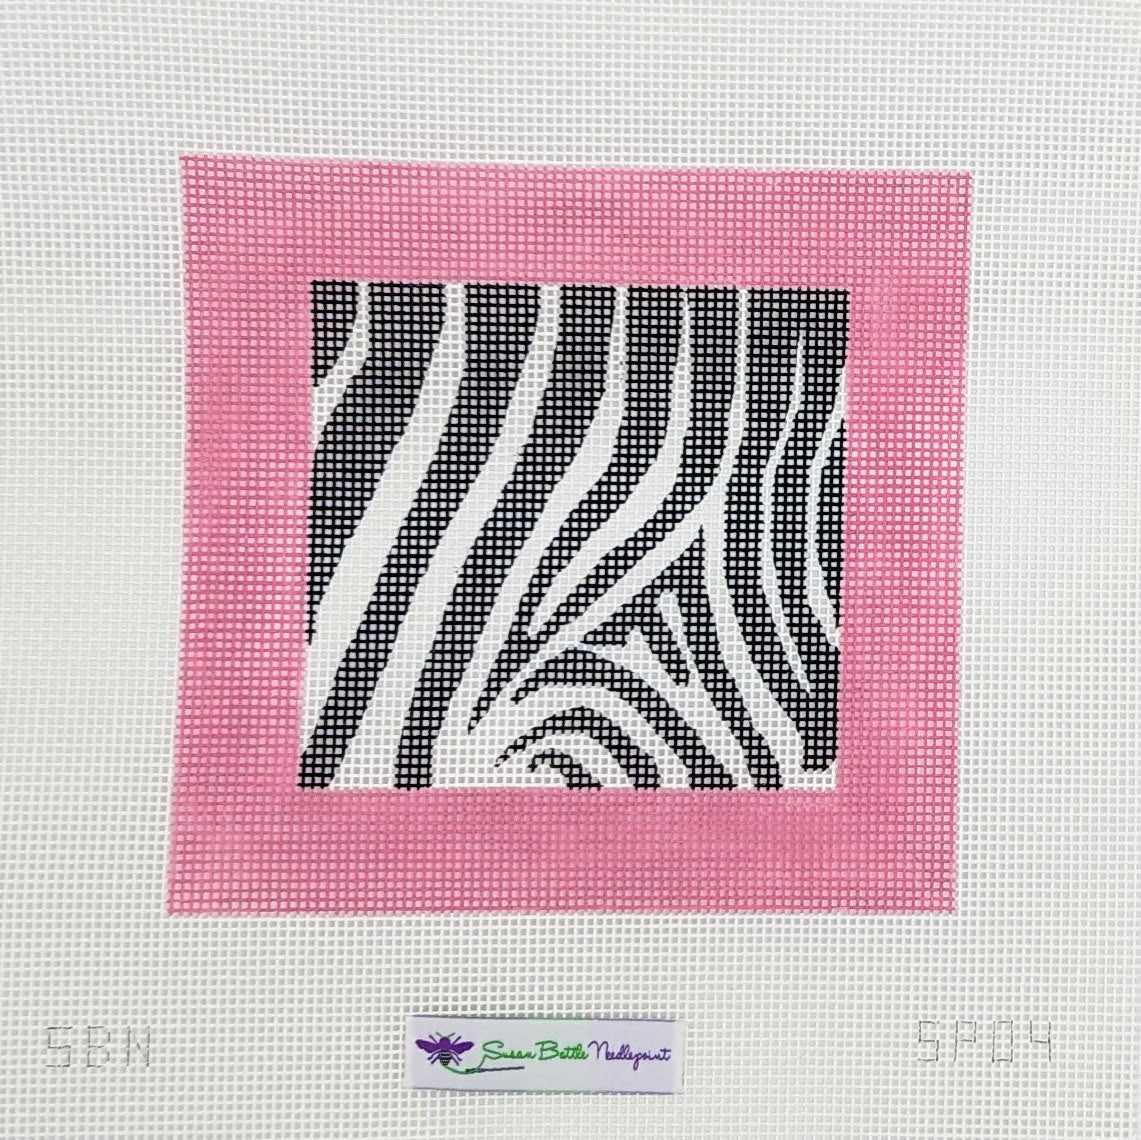 Zebra with Pink Border (on 10 mesh)